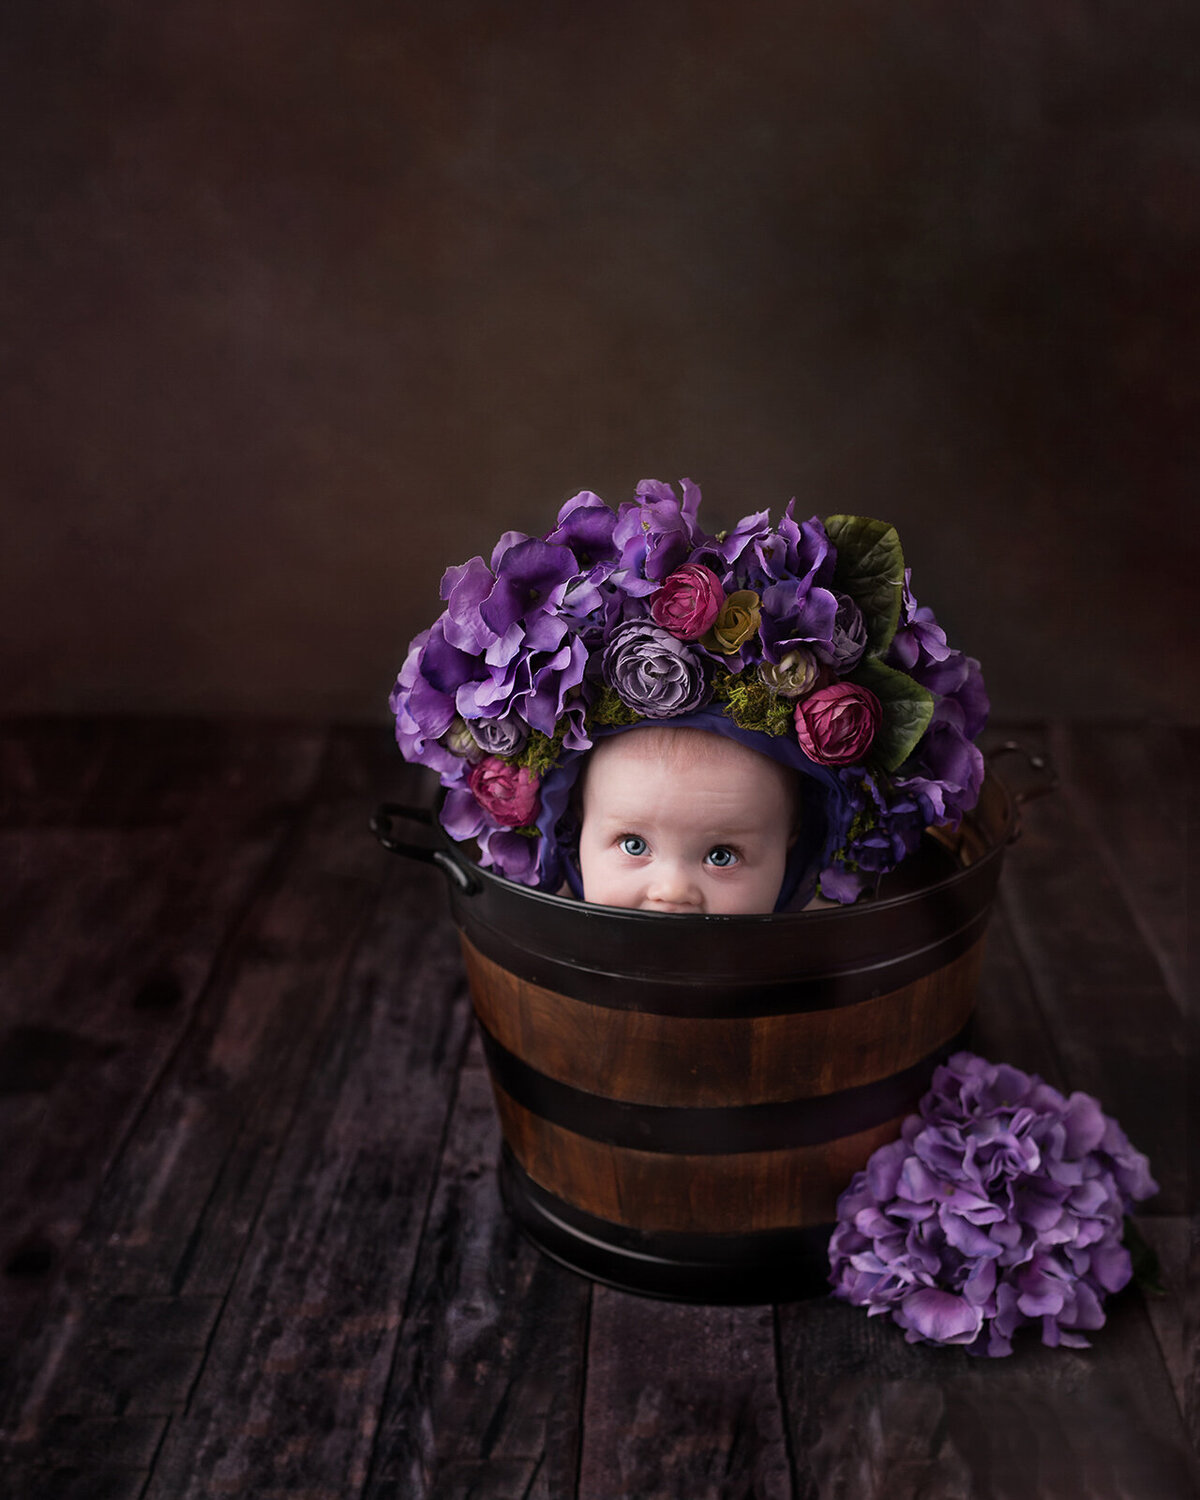 Cute little baby girl photo in a bucket with purple flowers